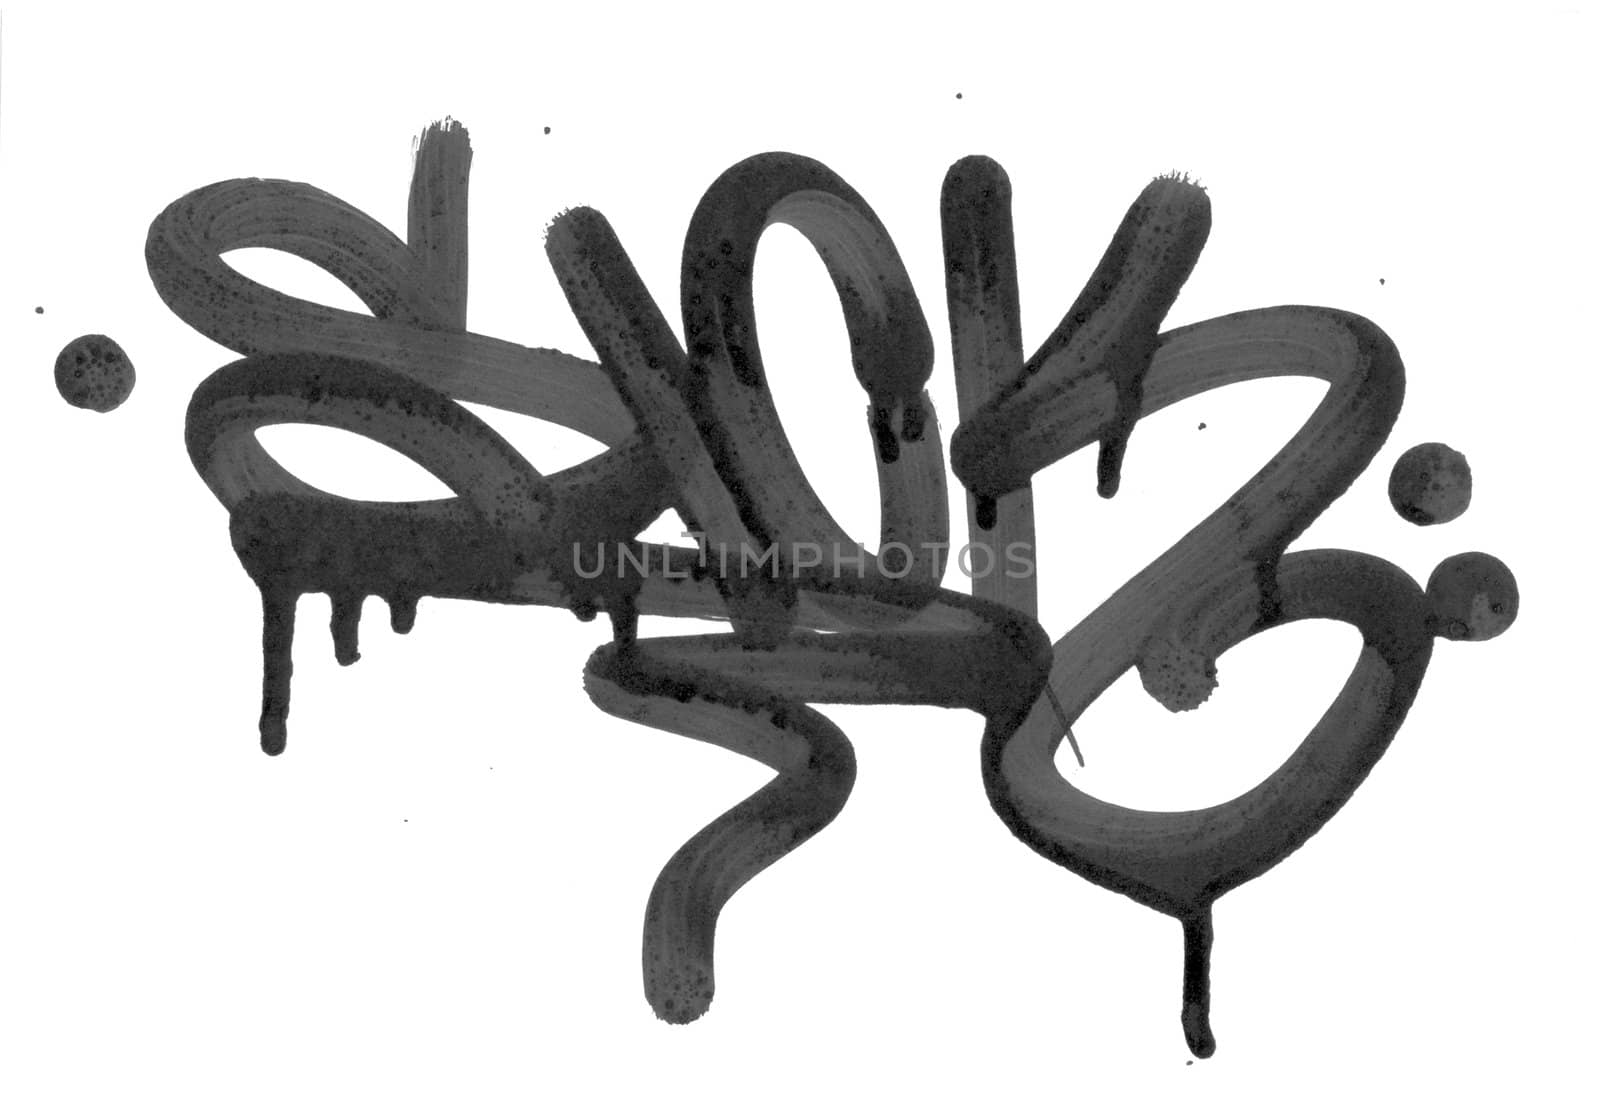 Graffitti spray paint - spraypaint vandalism grunge city urban y by jeremywhat